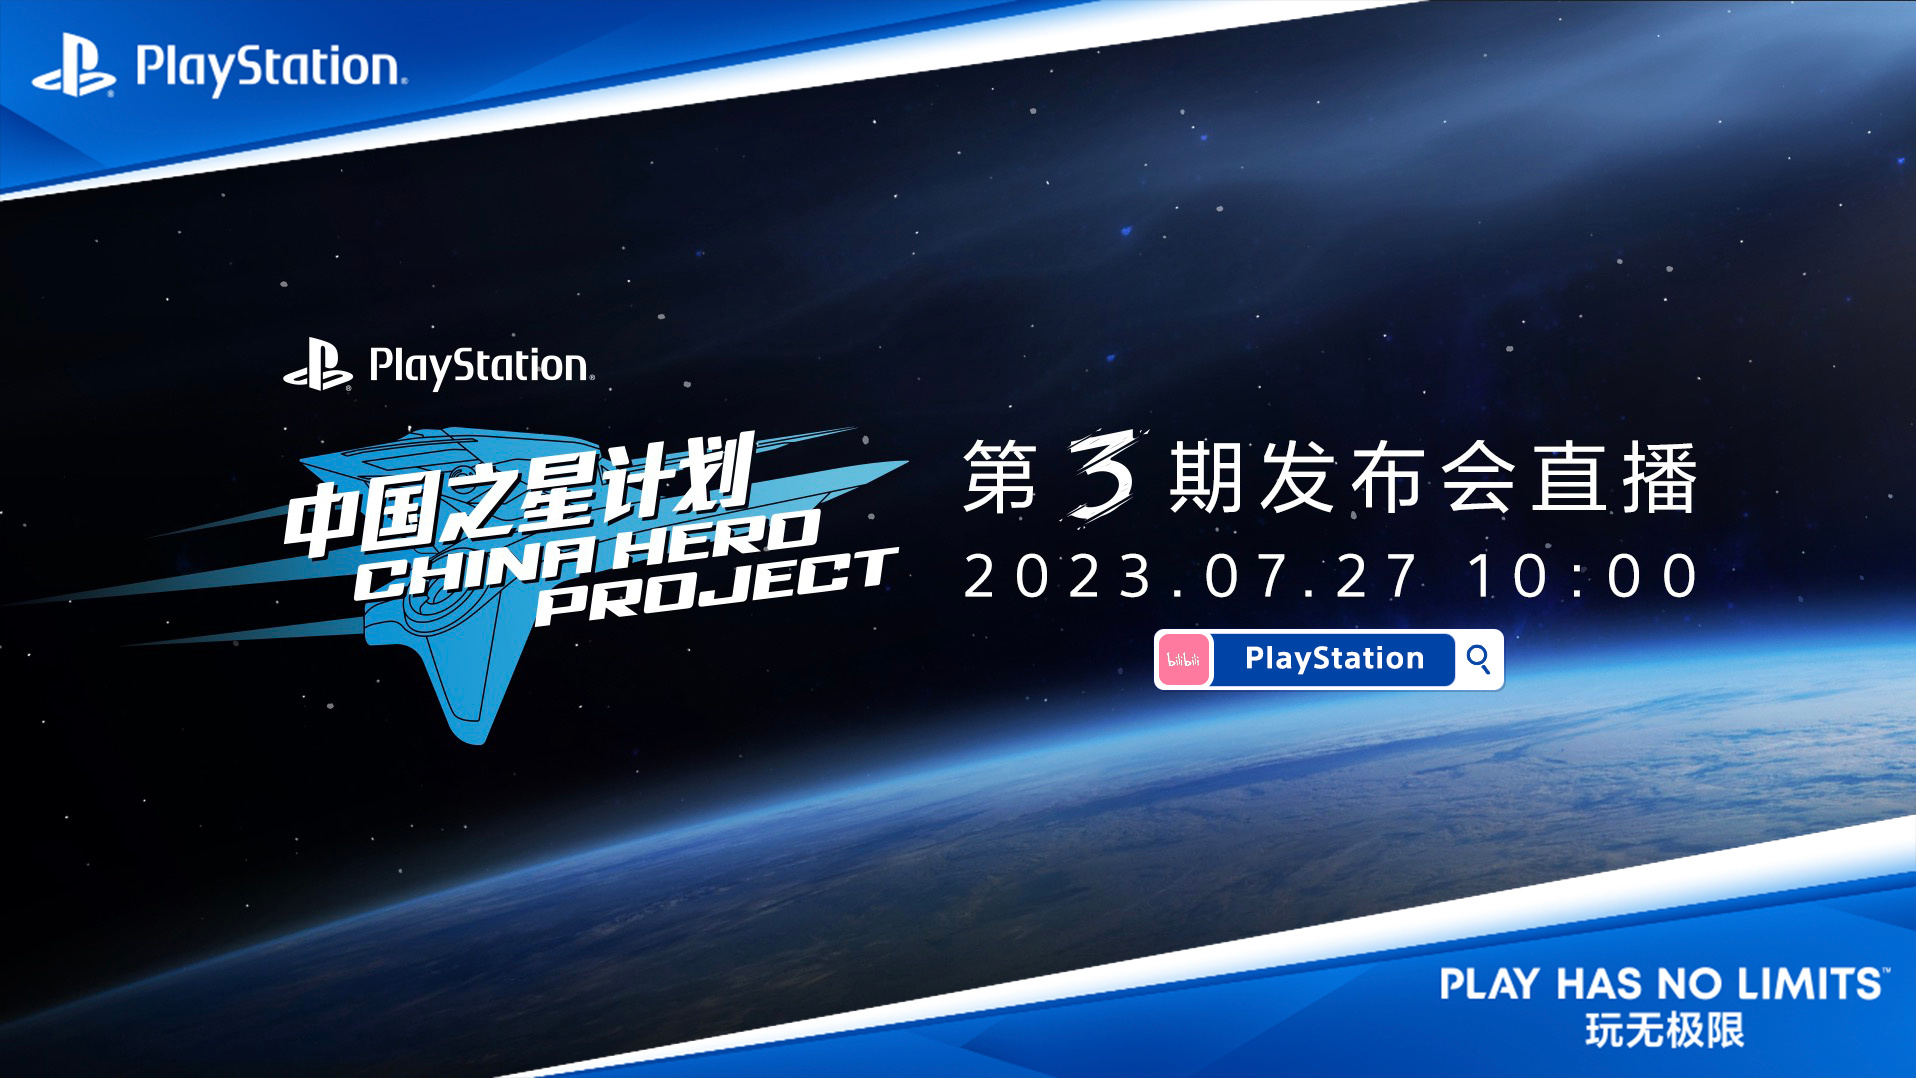 PlayStation中國宣布中國之星計劃三期發布會 7月27日舉行